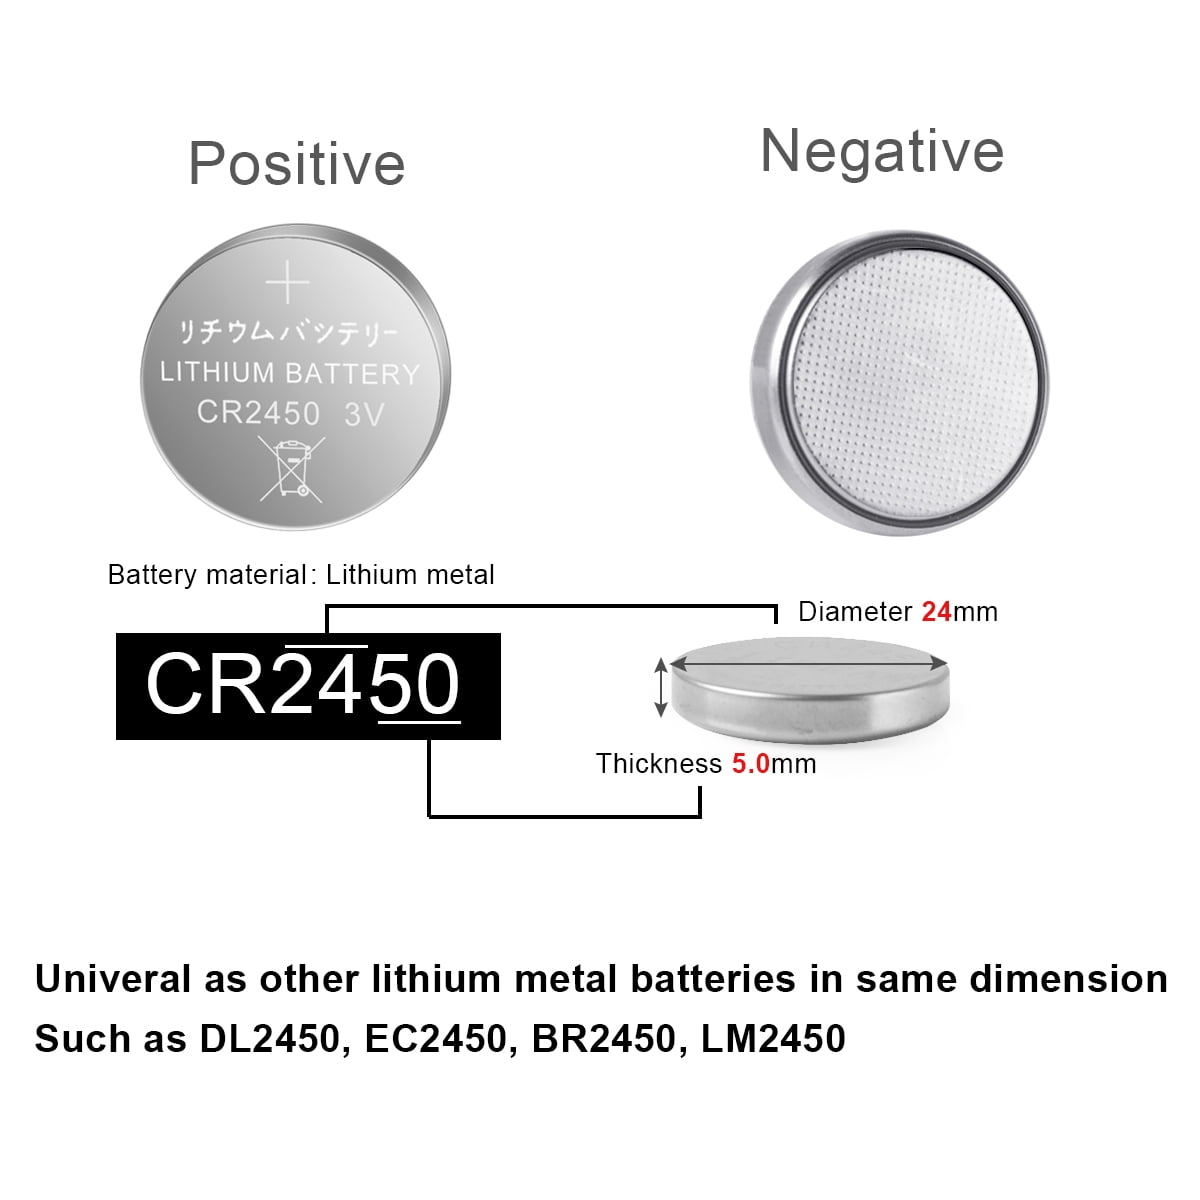 Murata CR2450 610mAh 3V Lithium (LiMnO2) Coin Cell Watch Battery - 120 Bulk